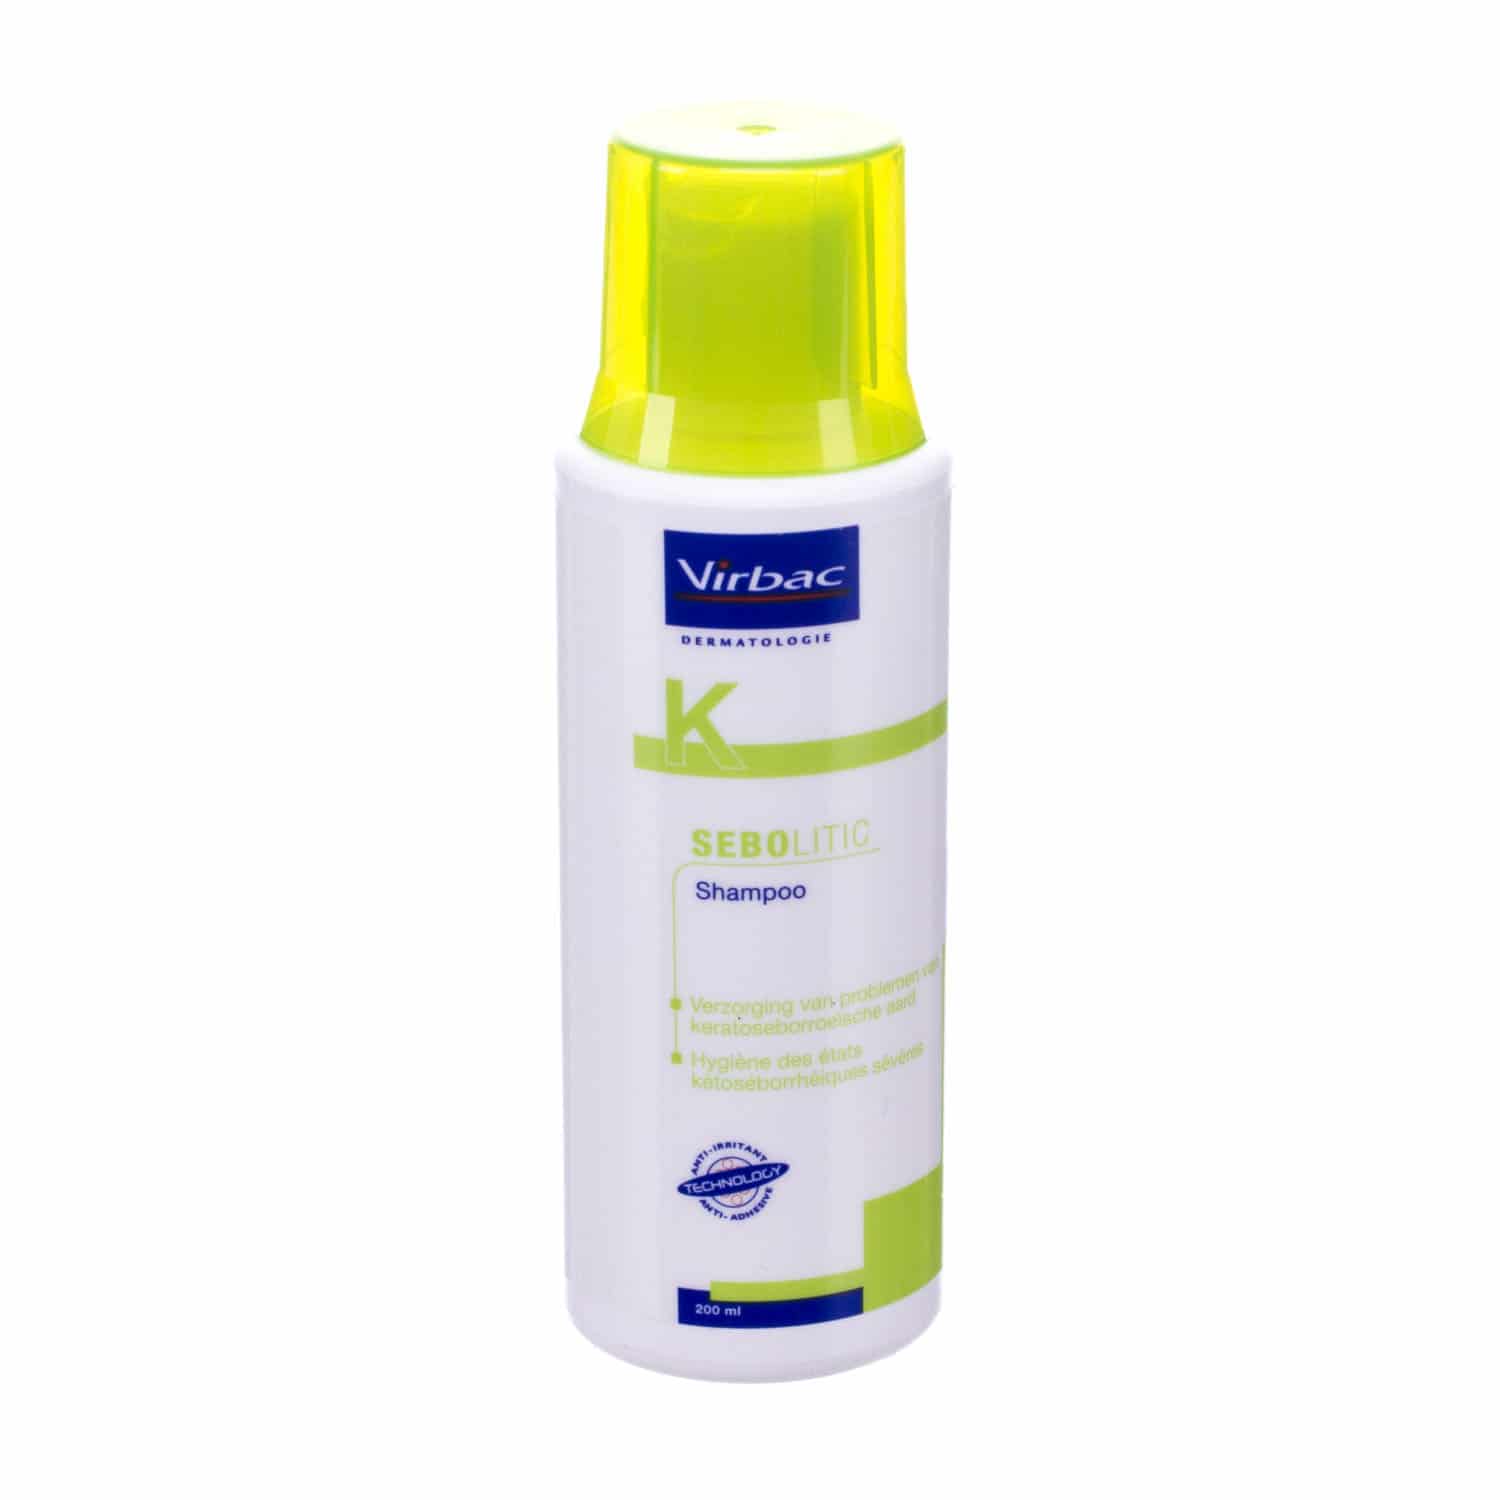 Revolutionair Openlijk Intiem Virbac Allerderm Sebocalm Shampoo 250 ml - Online bestellen | Optiphar